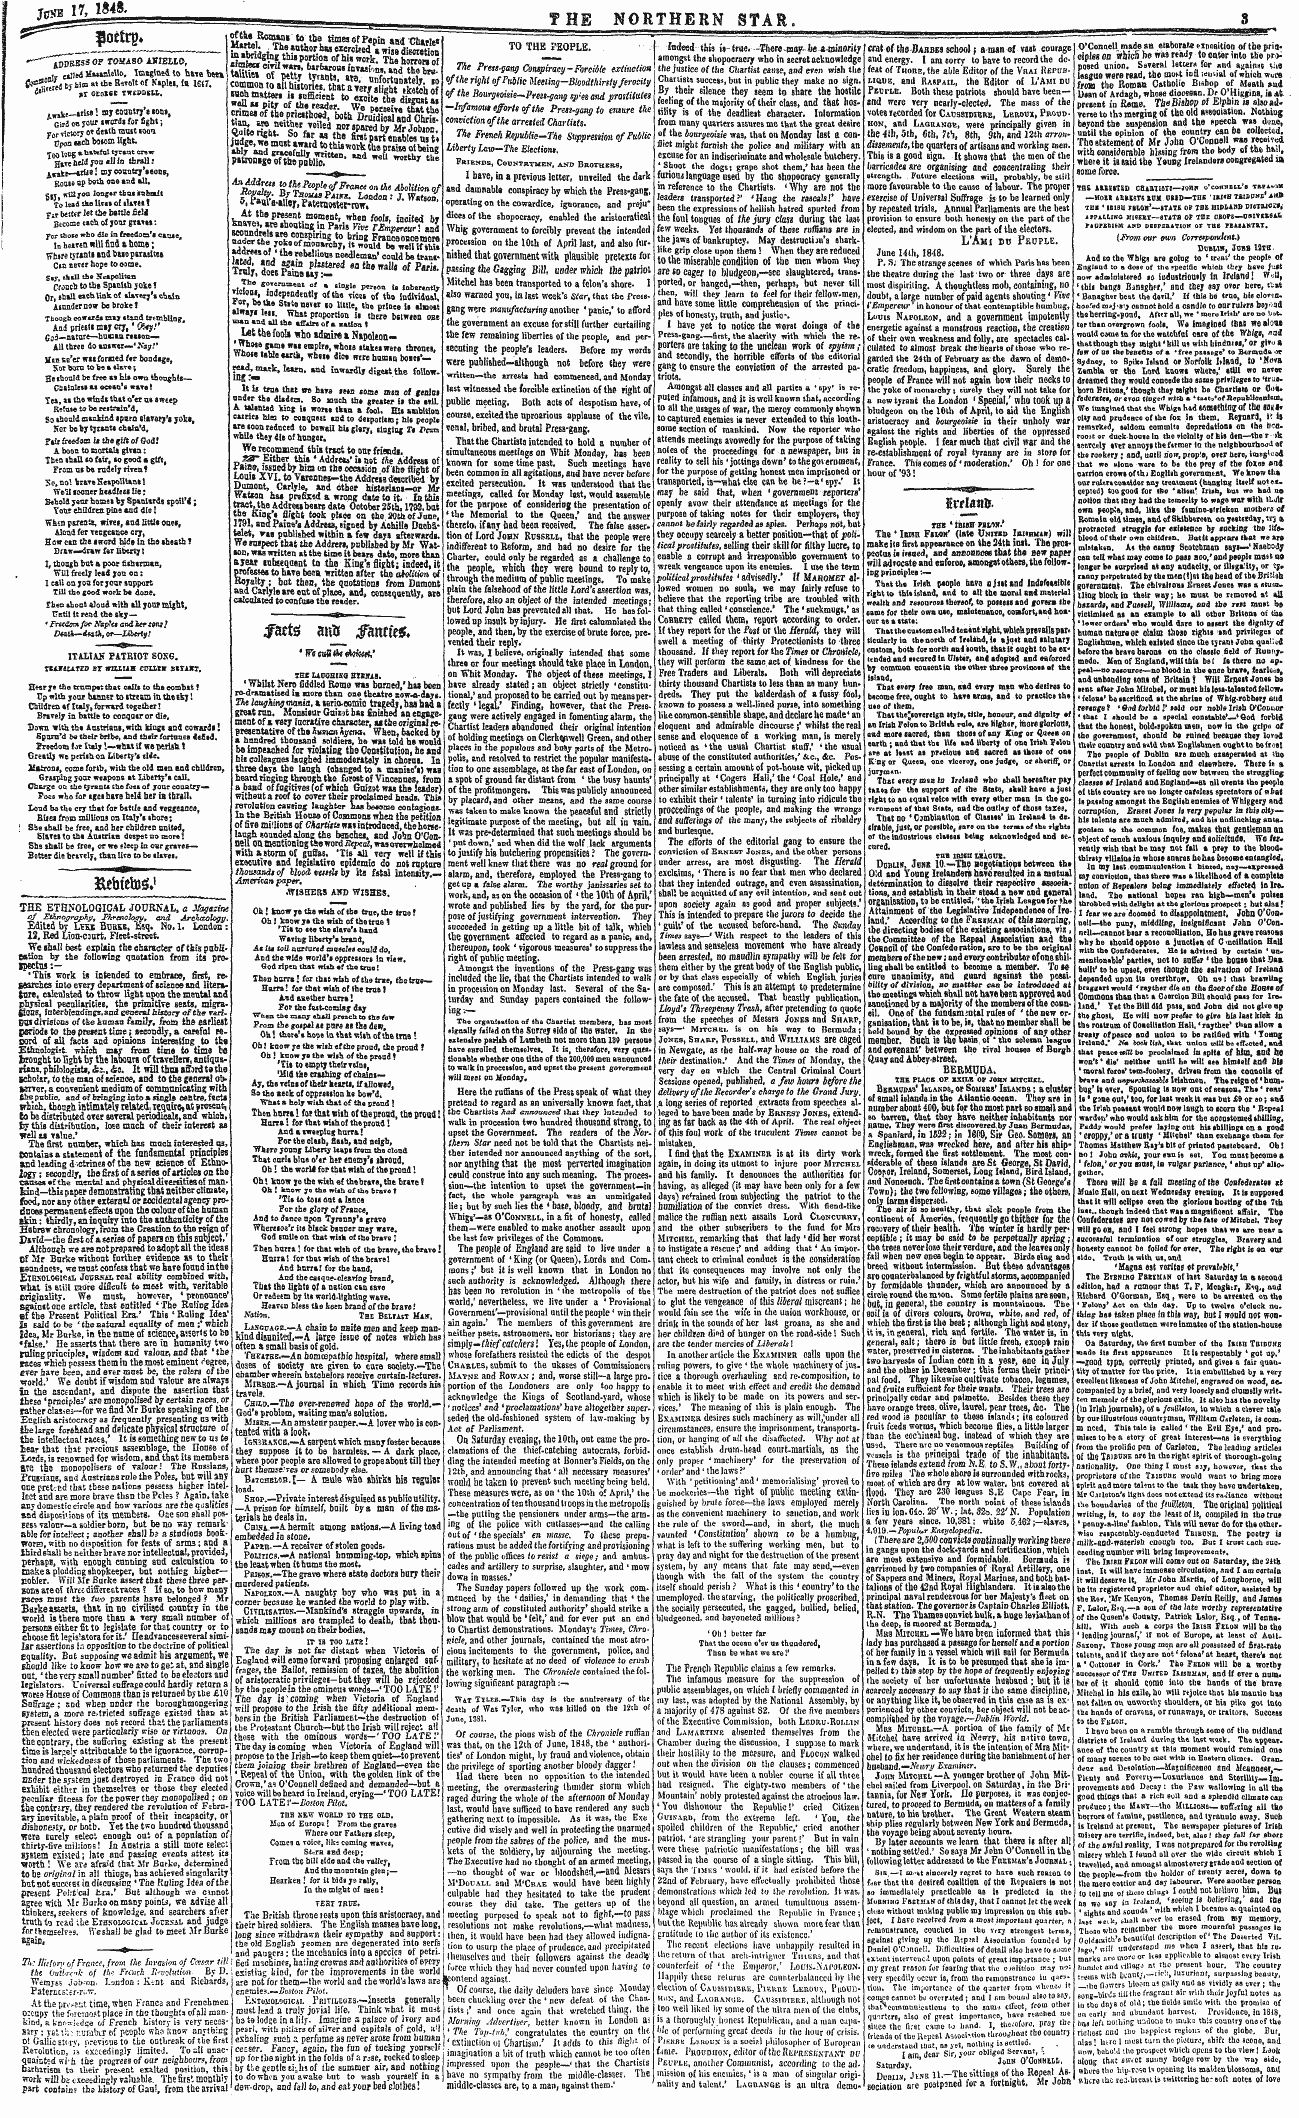 Northern Star (1837-1852): jS F Y, 2nd edition - Ftbteto&I